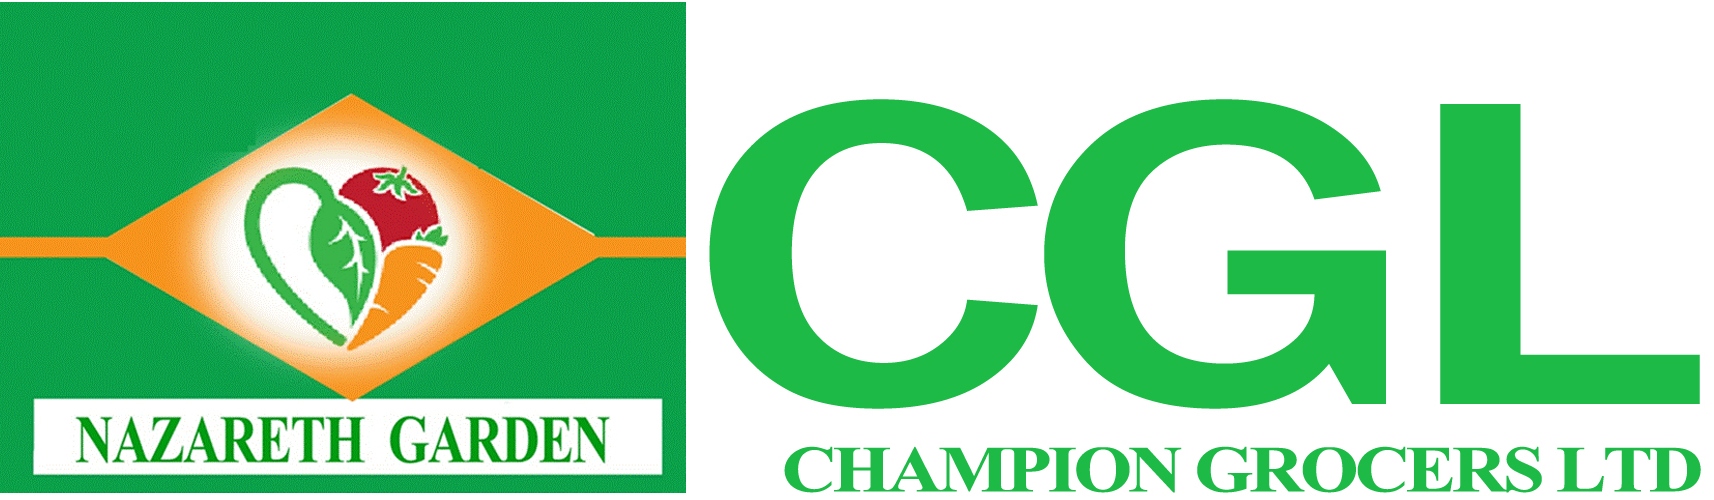 Champion Grocers Ltd